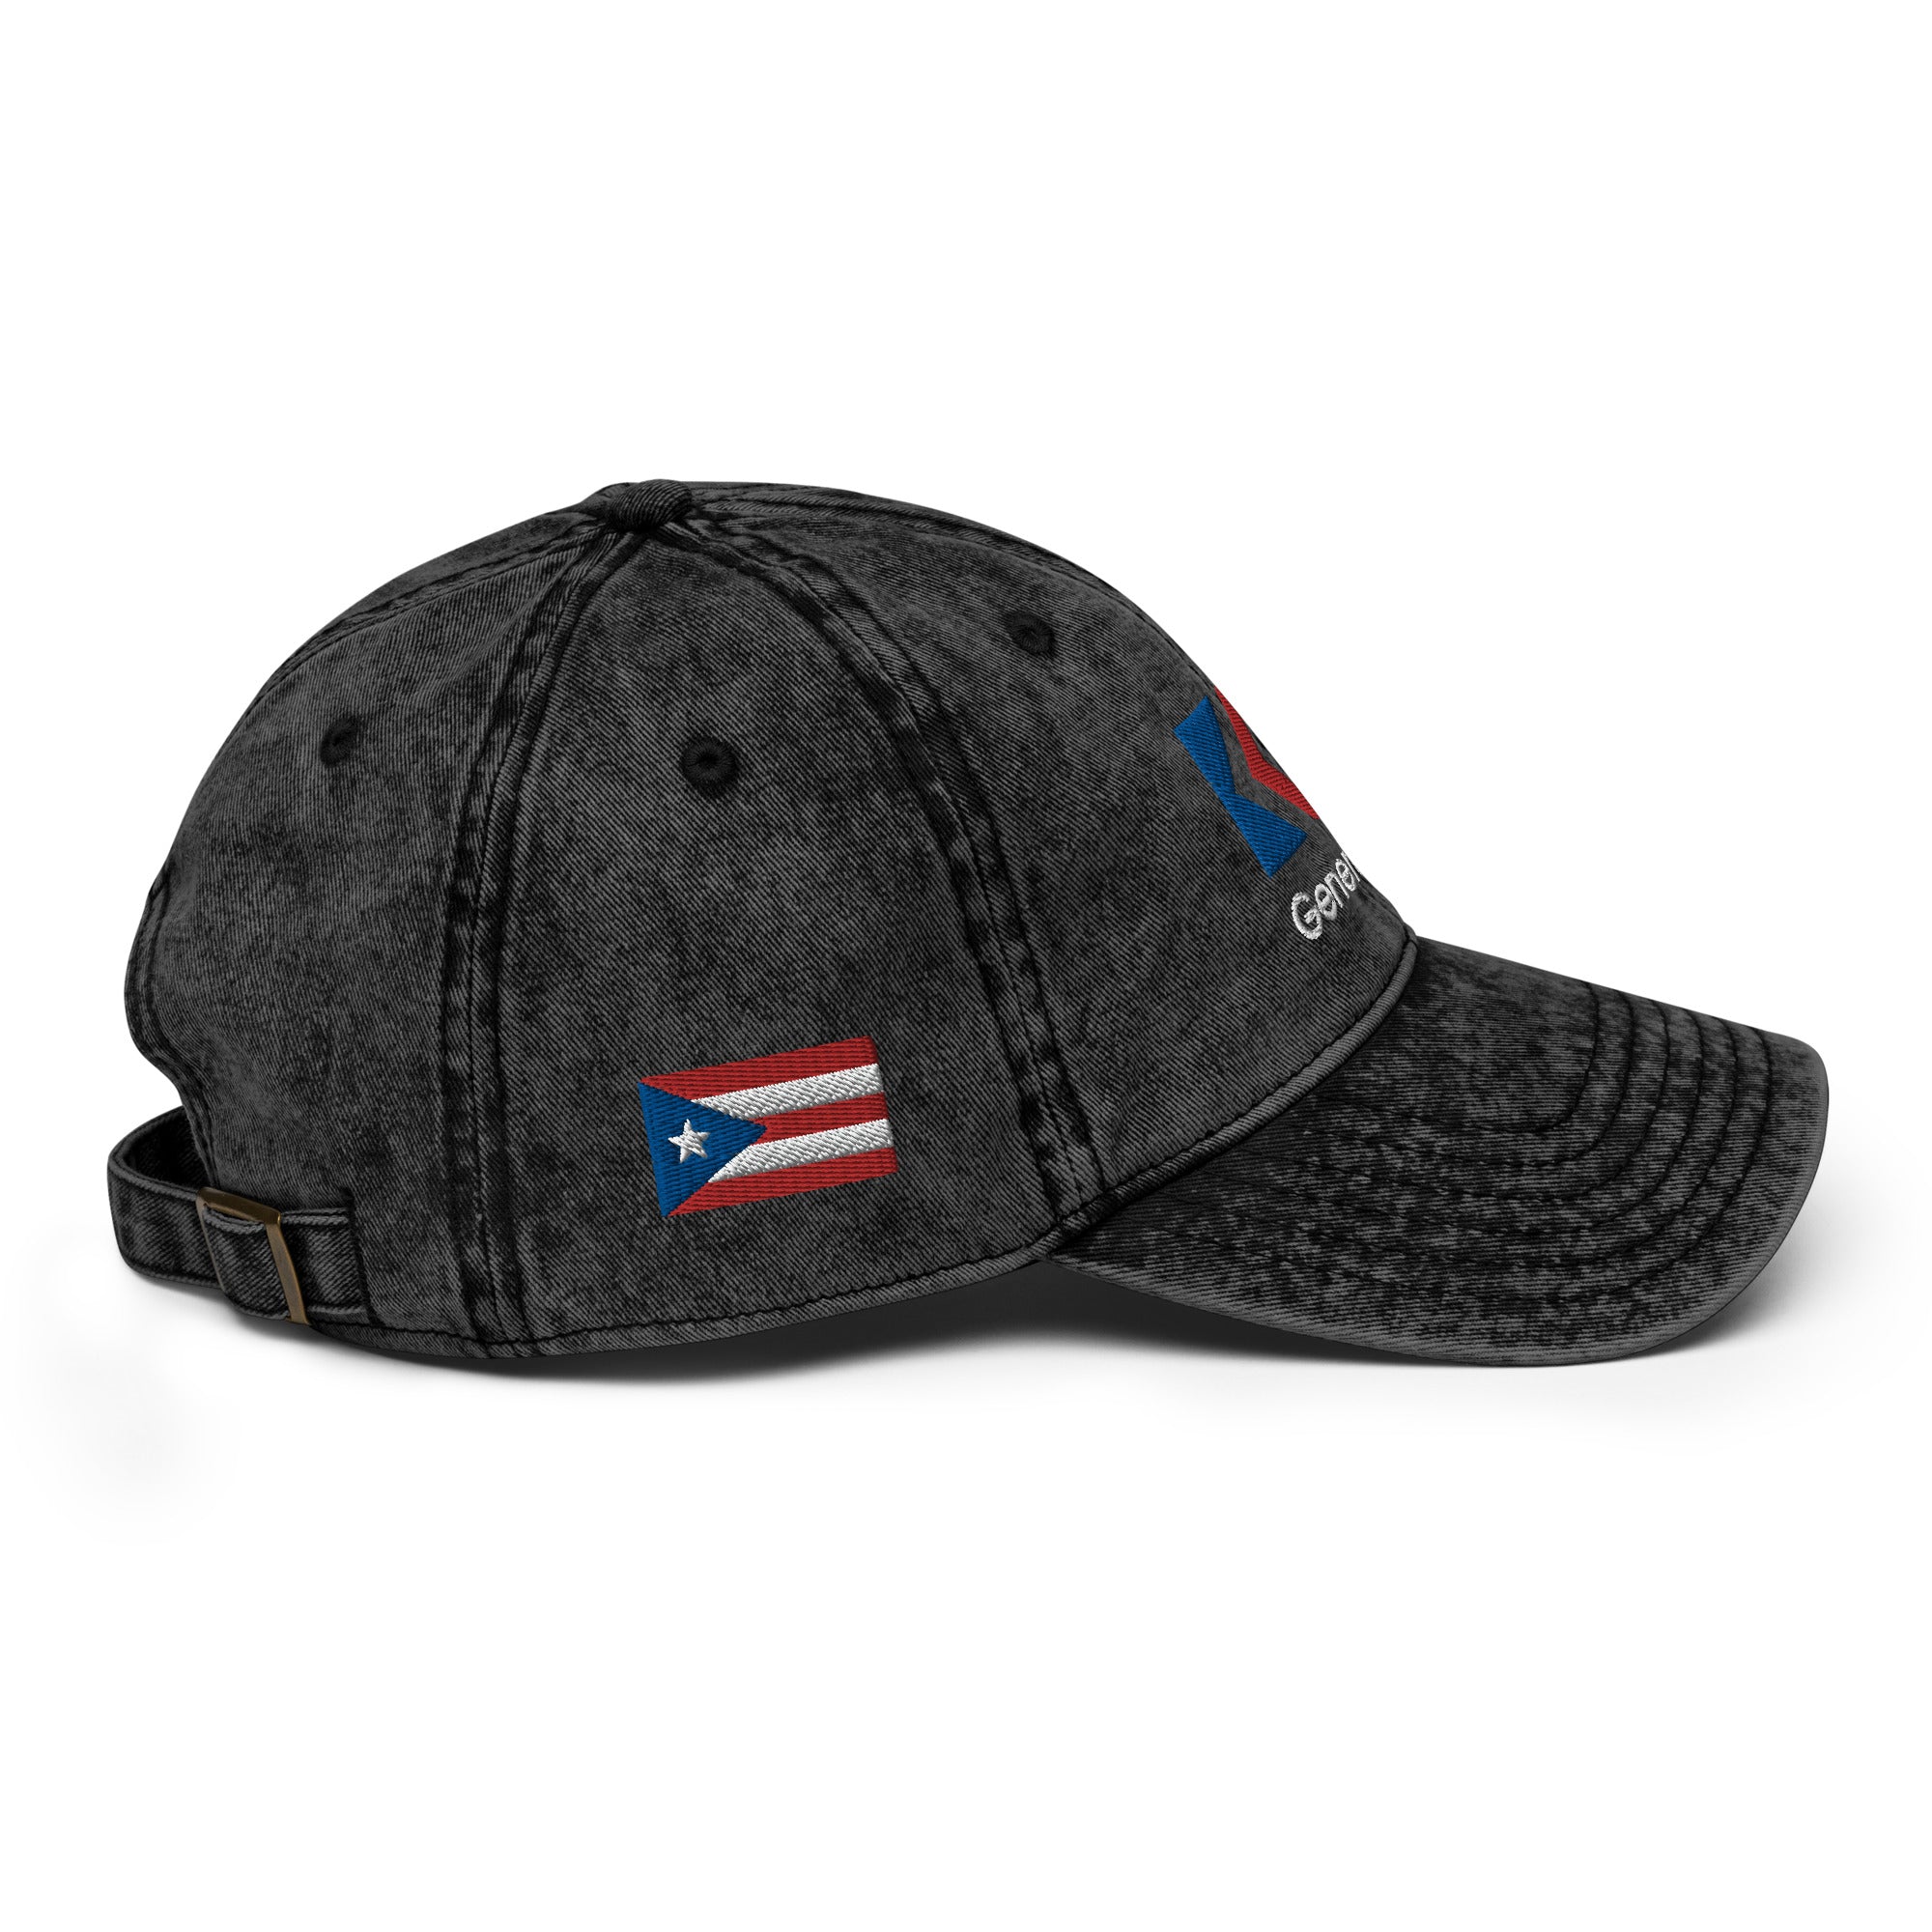 🇵🇷 Puerto Rico Triple K G vintage twill cap